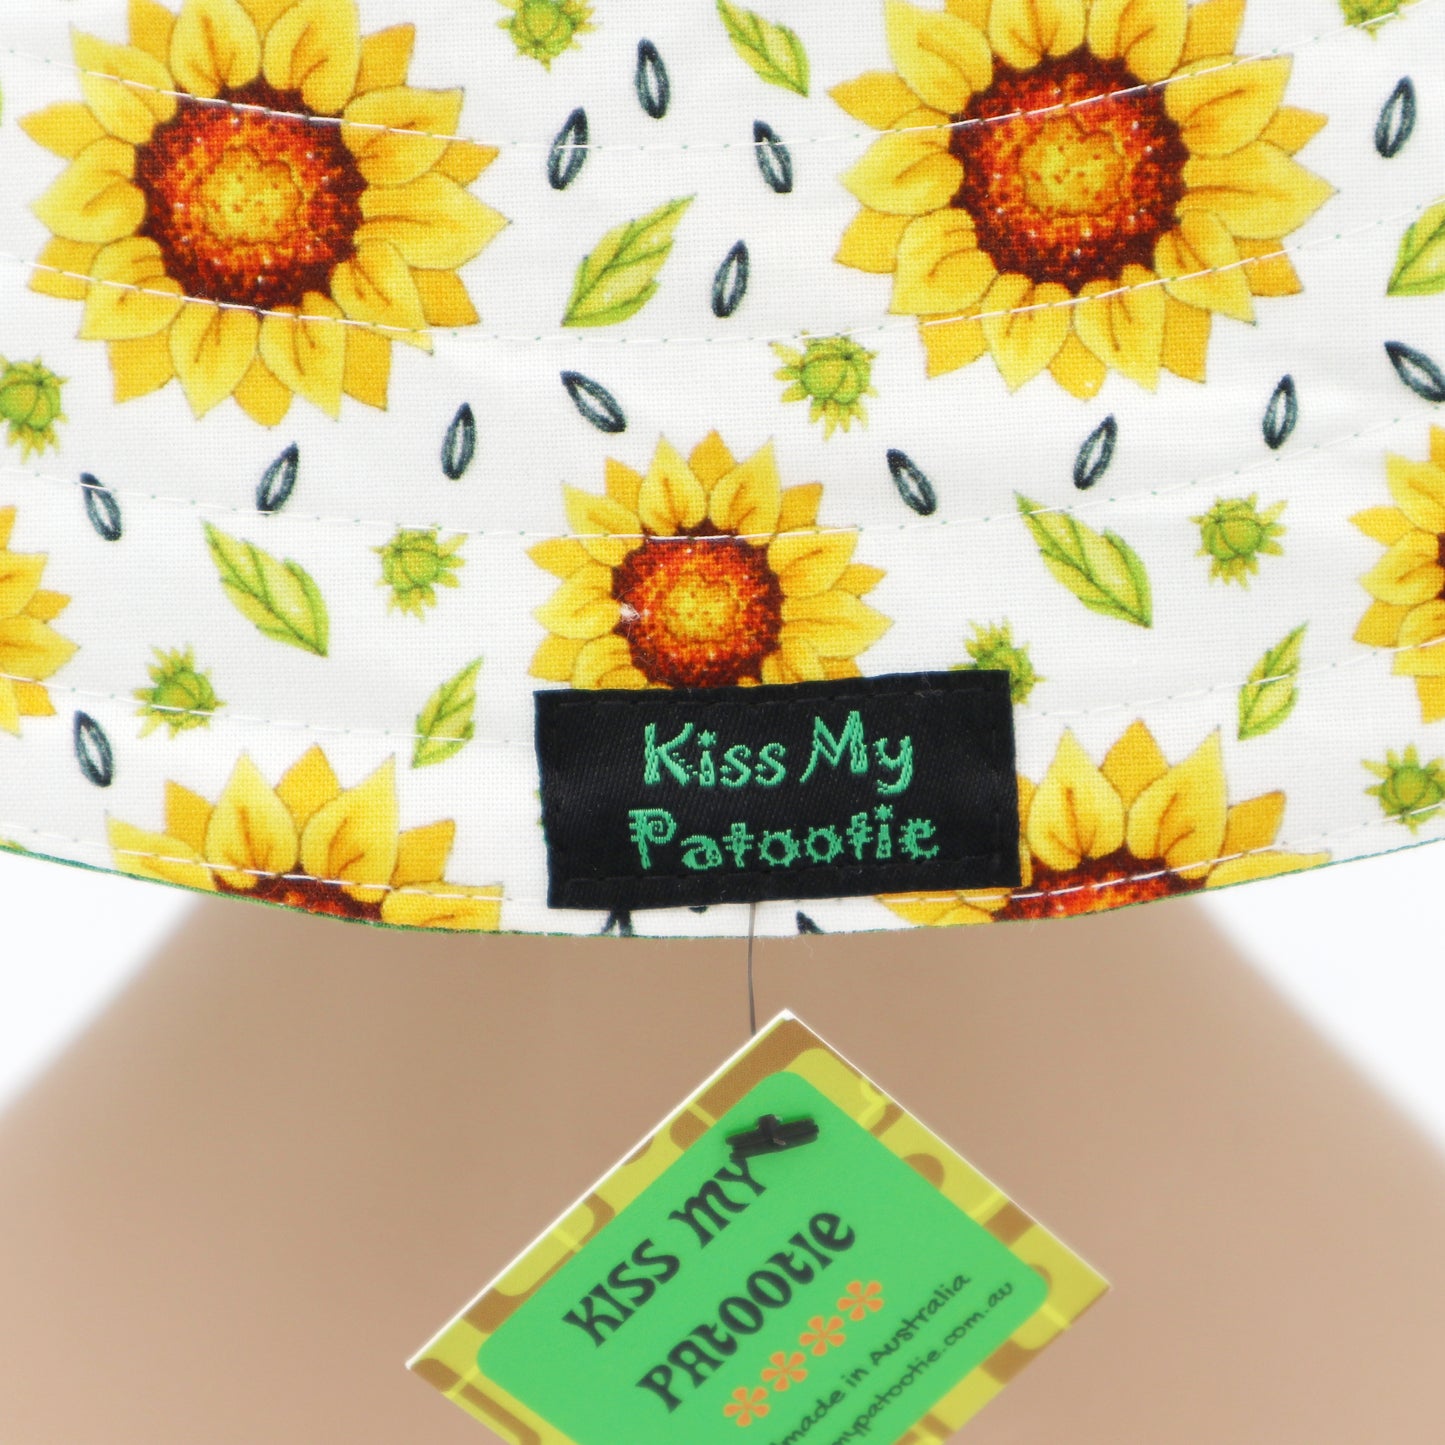 Wide Brim Reversible Sun Hat - sunflower